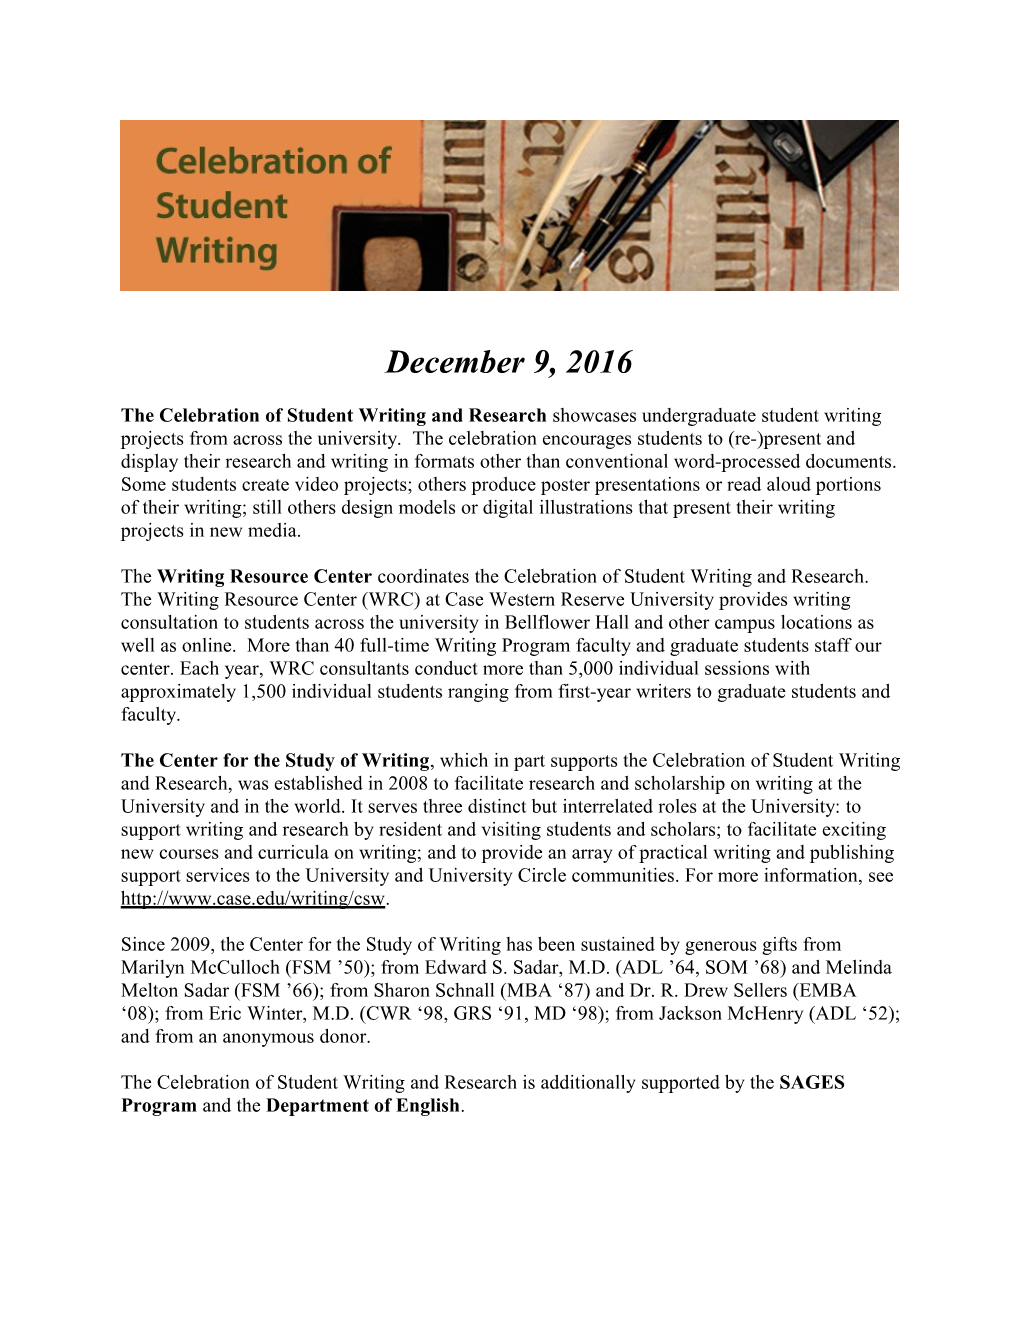 The Celebration of Student Writingand Research Showcases Undergraduate Student Writing